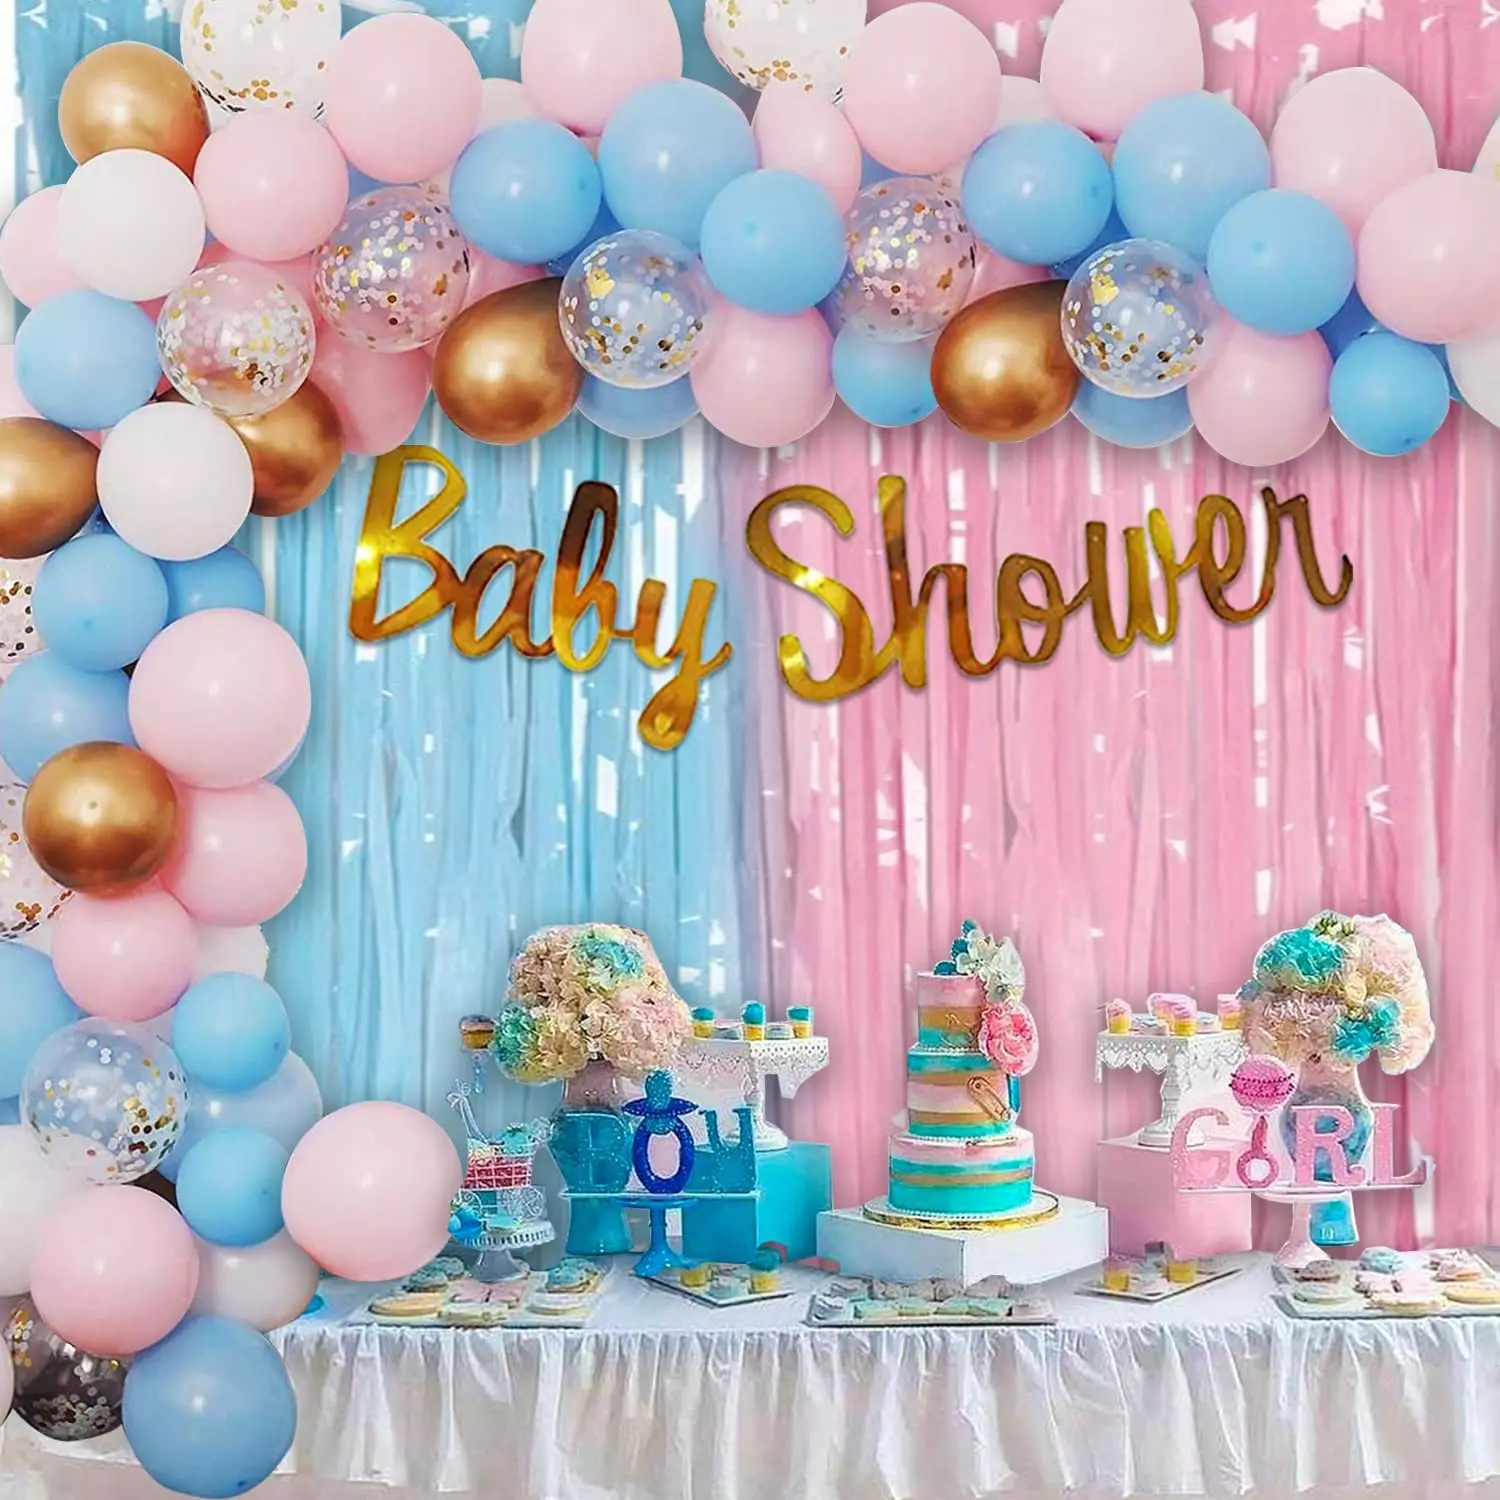 Baby-shower-1500